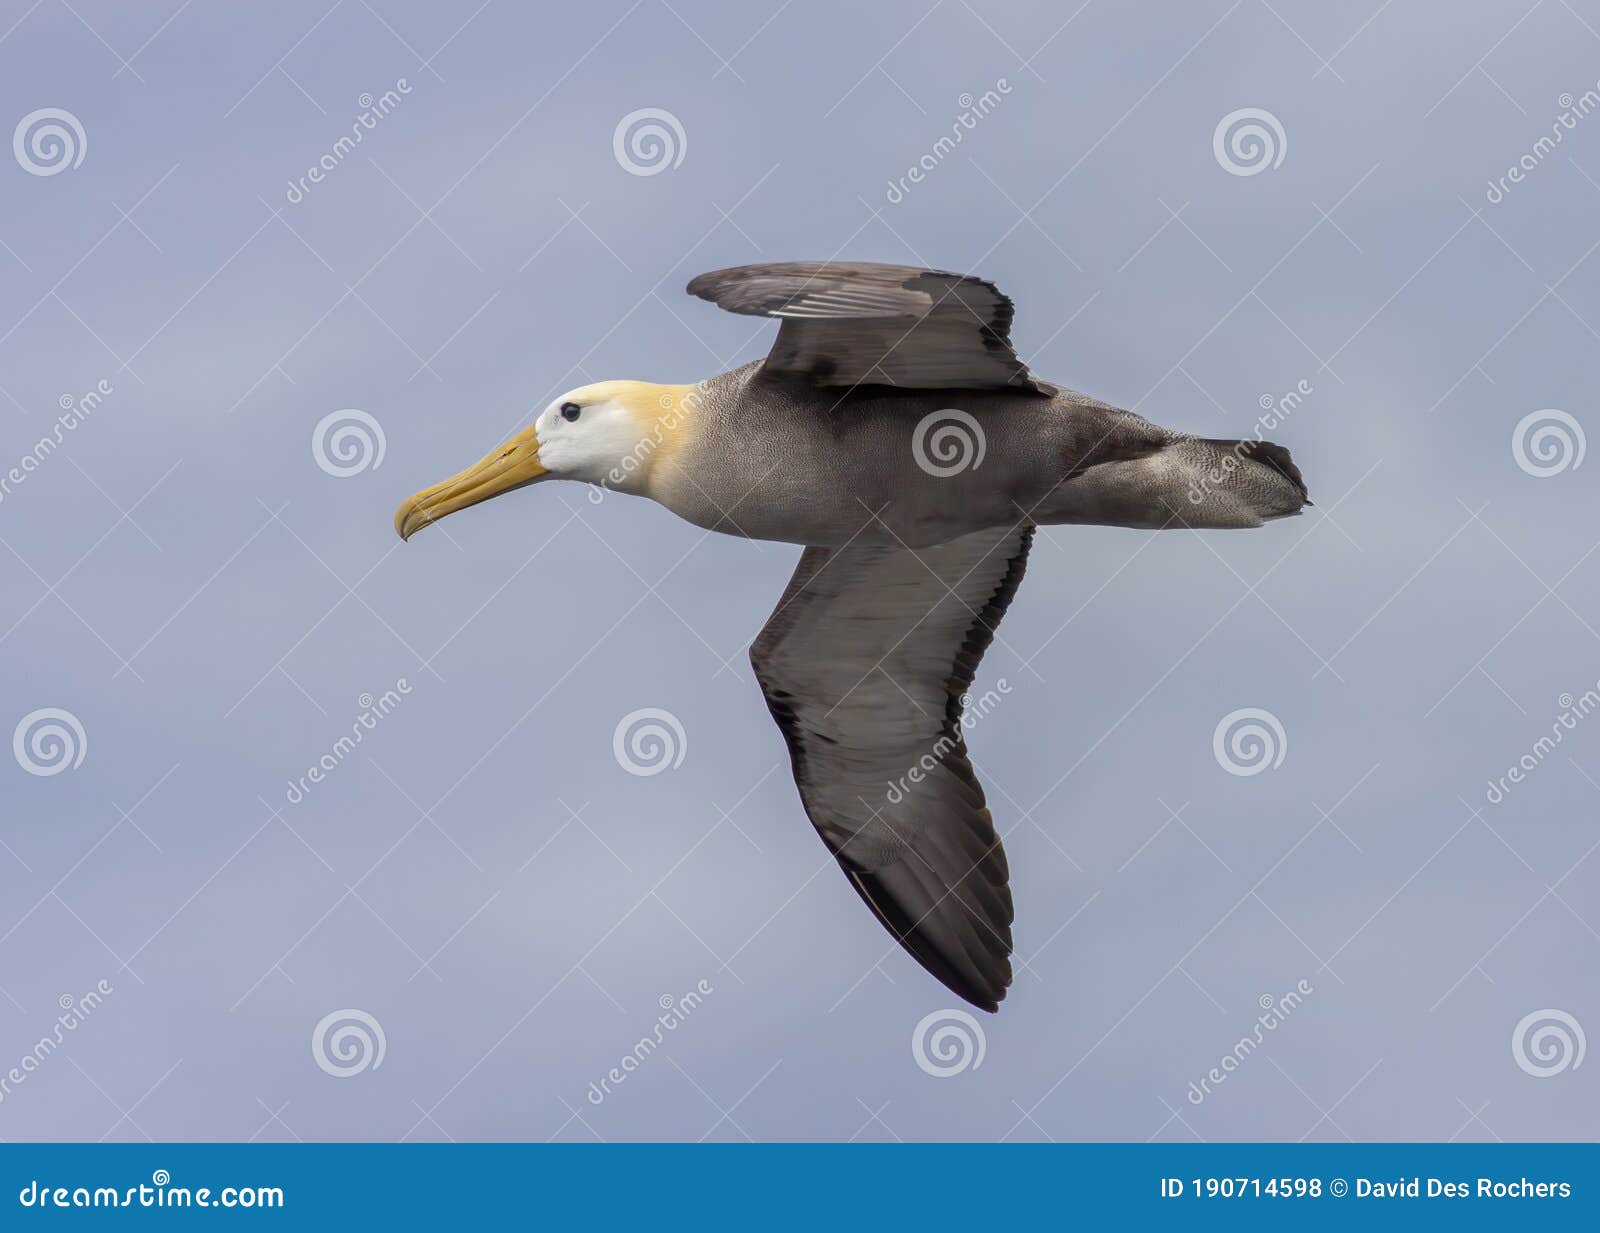 waved albatross in flight, galapagos islands